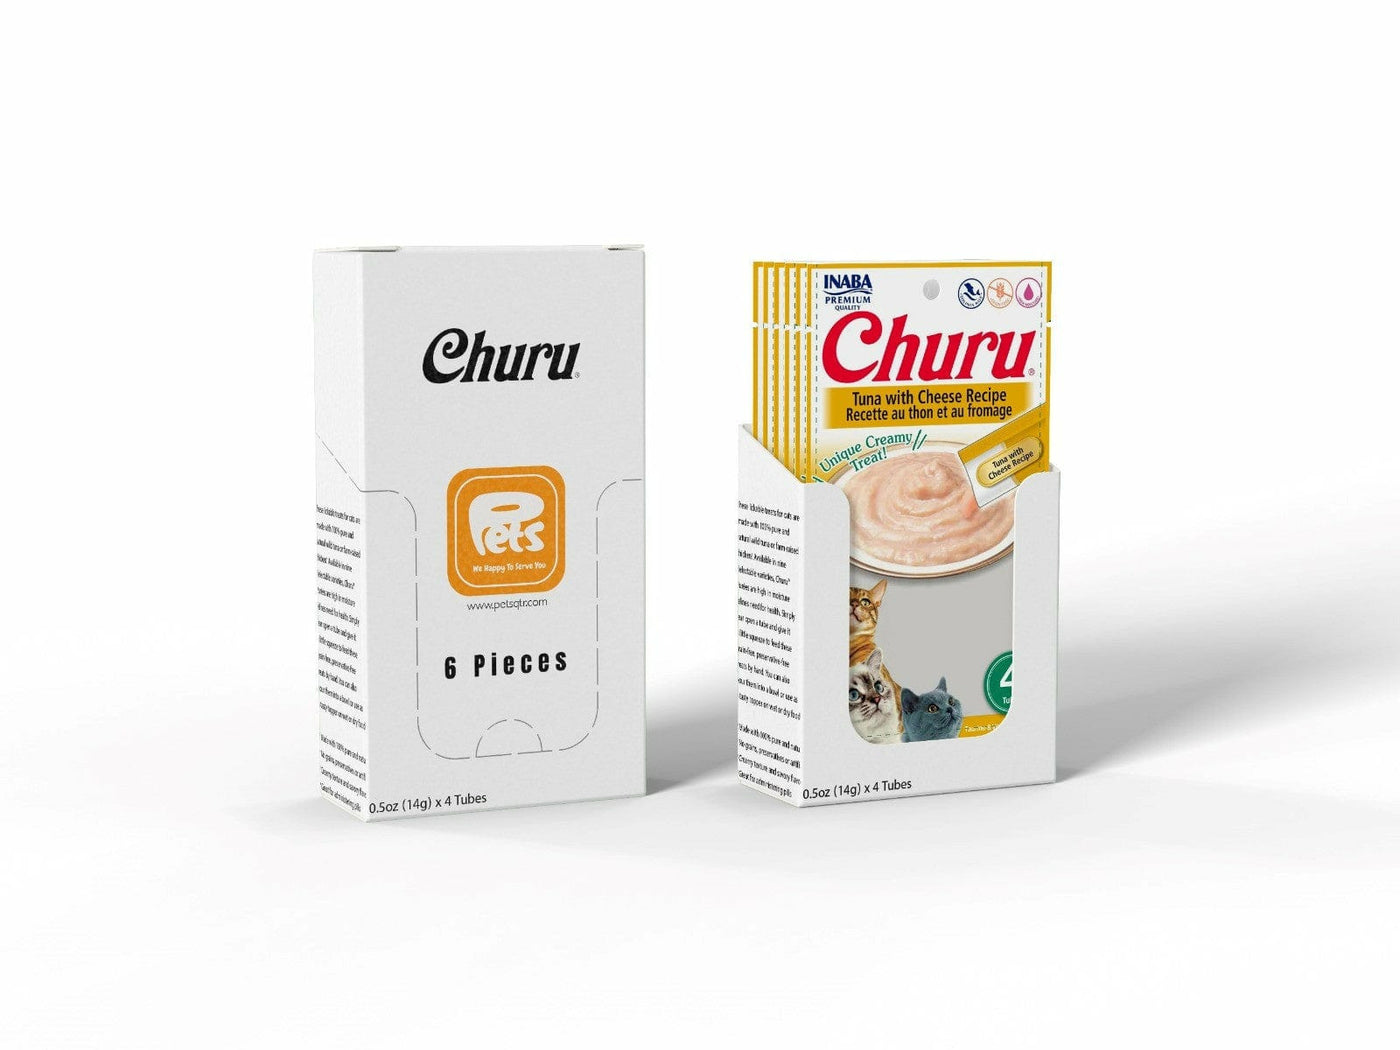 Churu Tuna with Cheese Recipe 4 tubes 56g